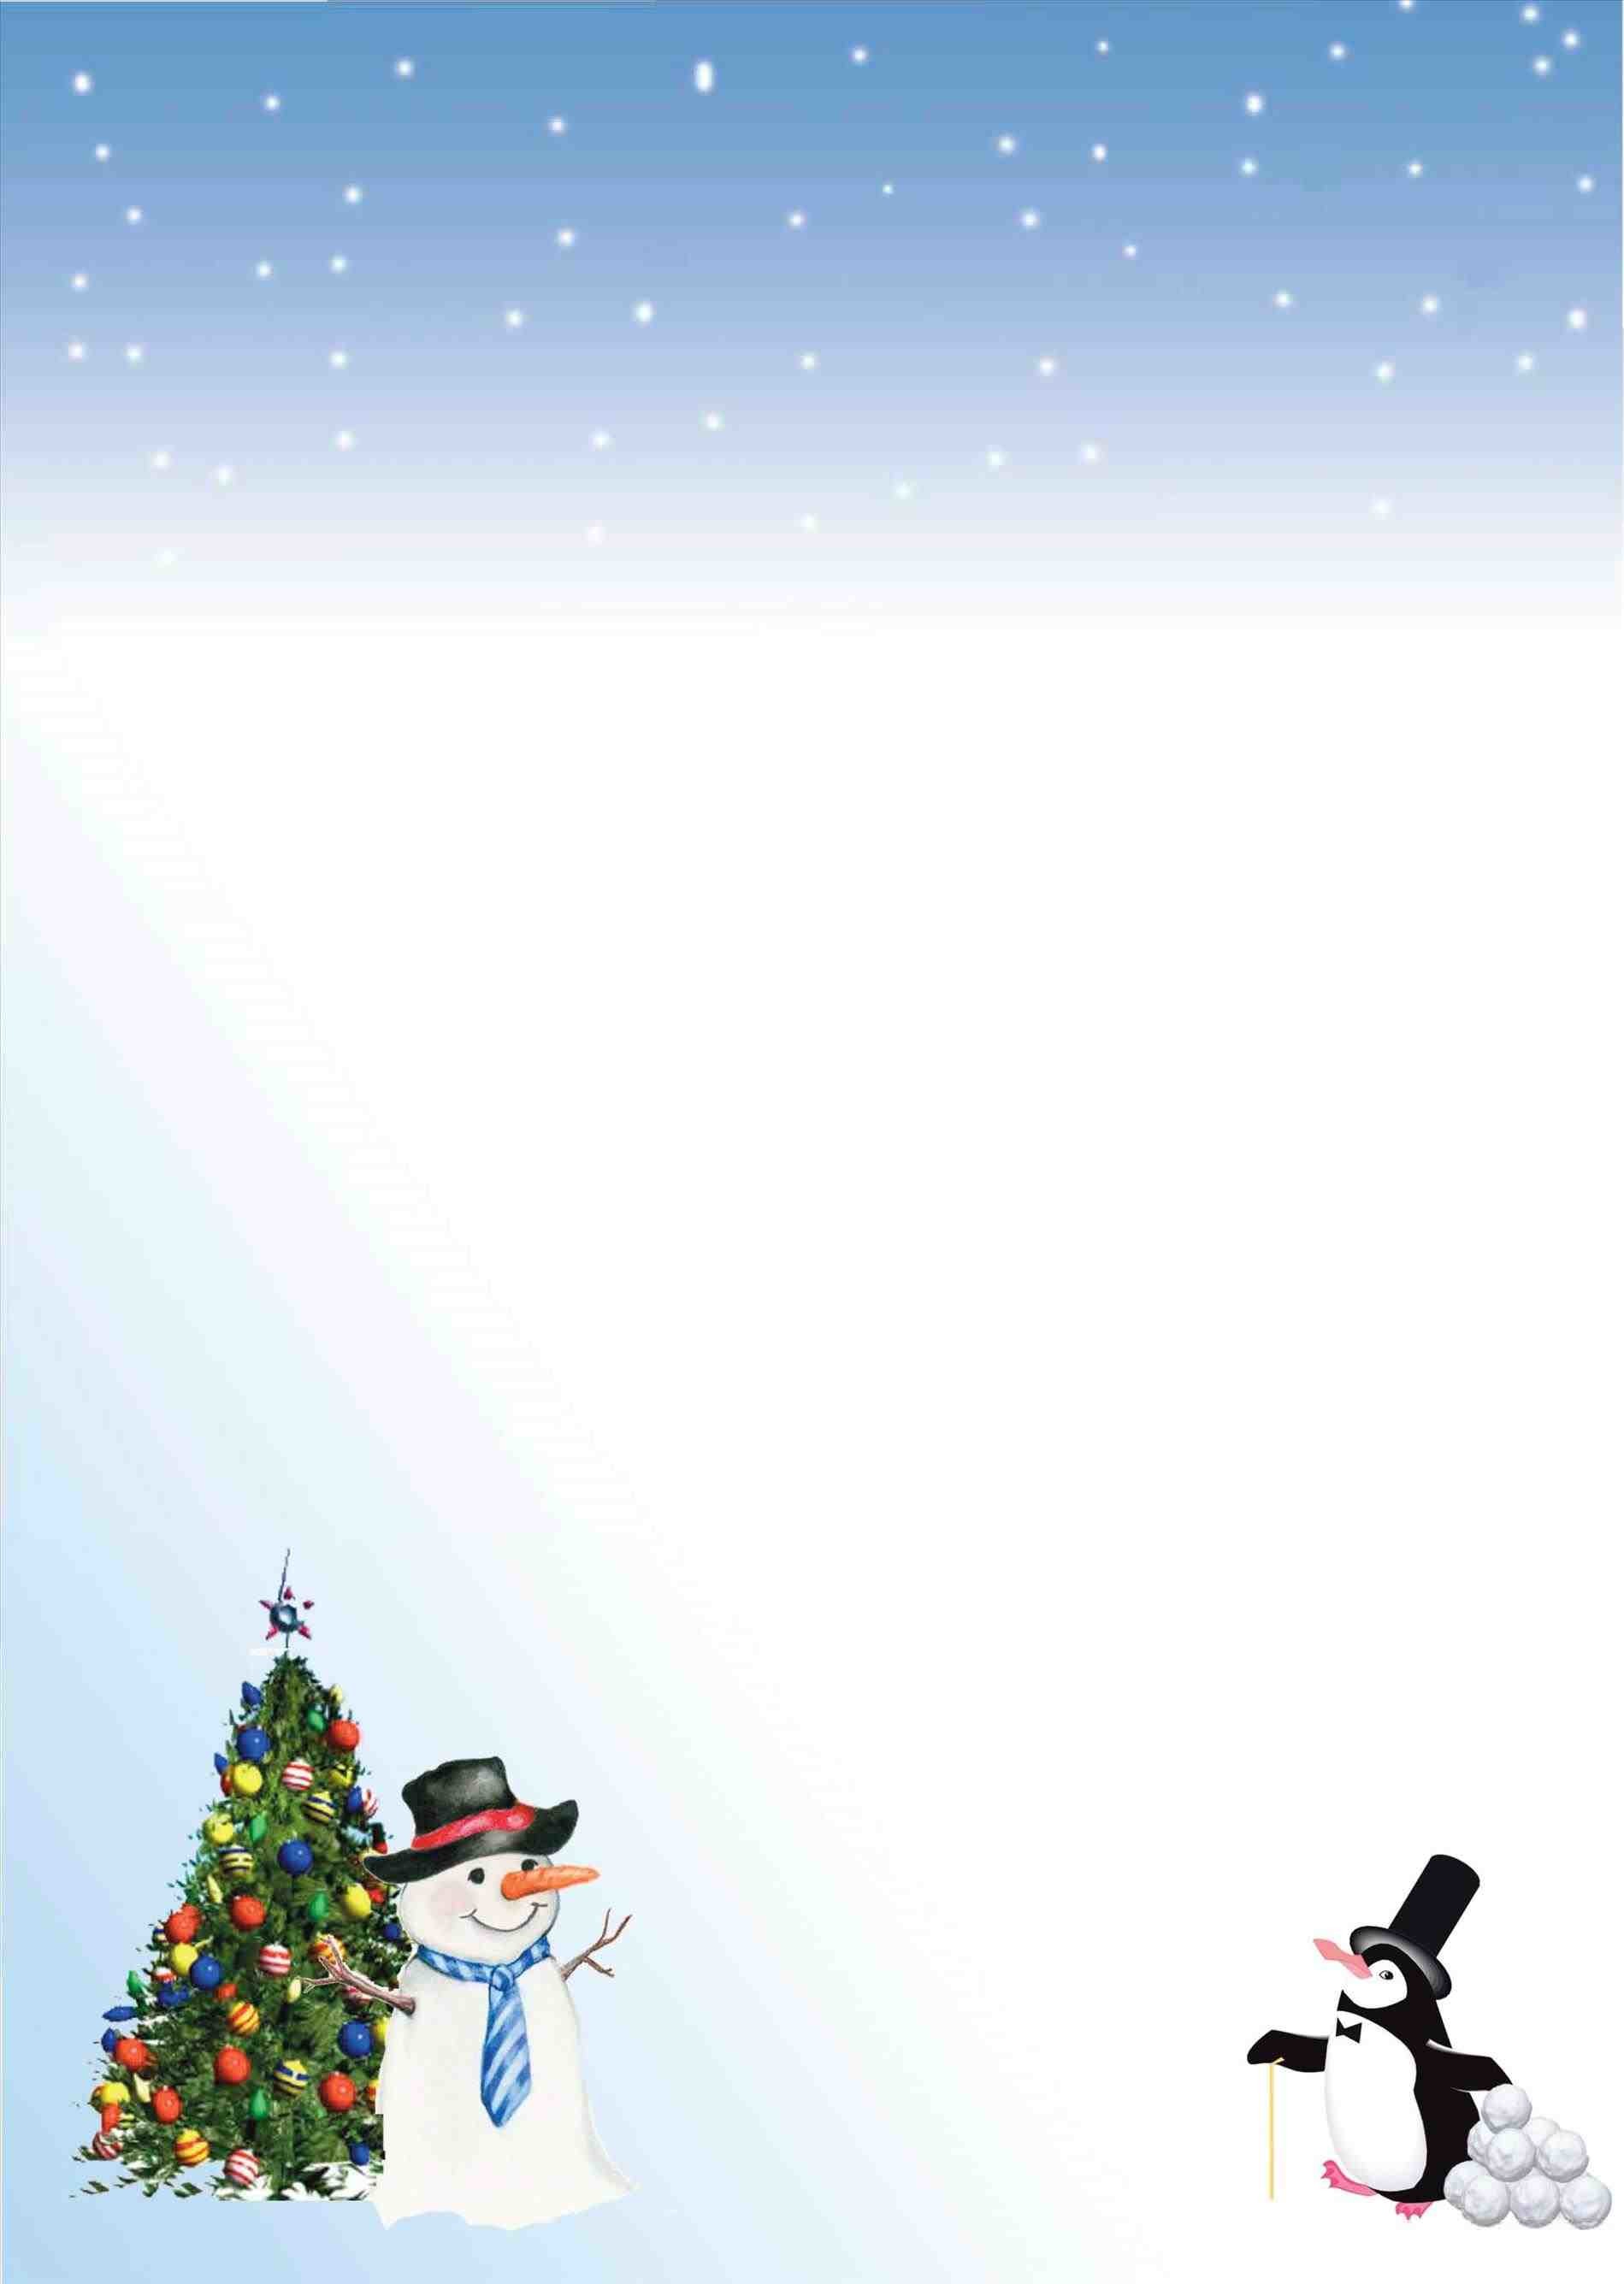 1899x2671 frames card reindeer elf santa claus stock vector card christmas letter  background reindeer elf santa claus